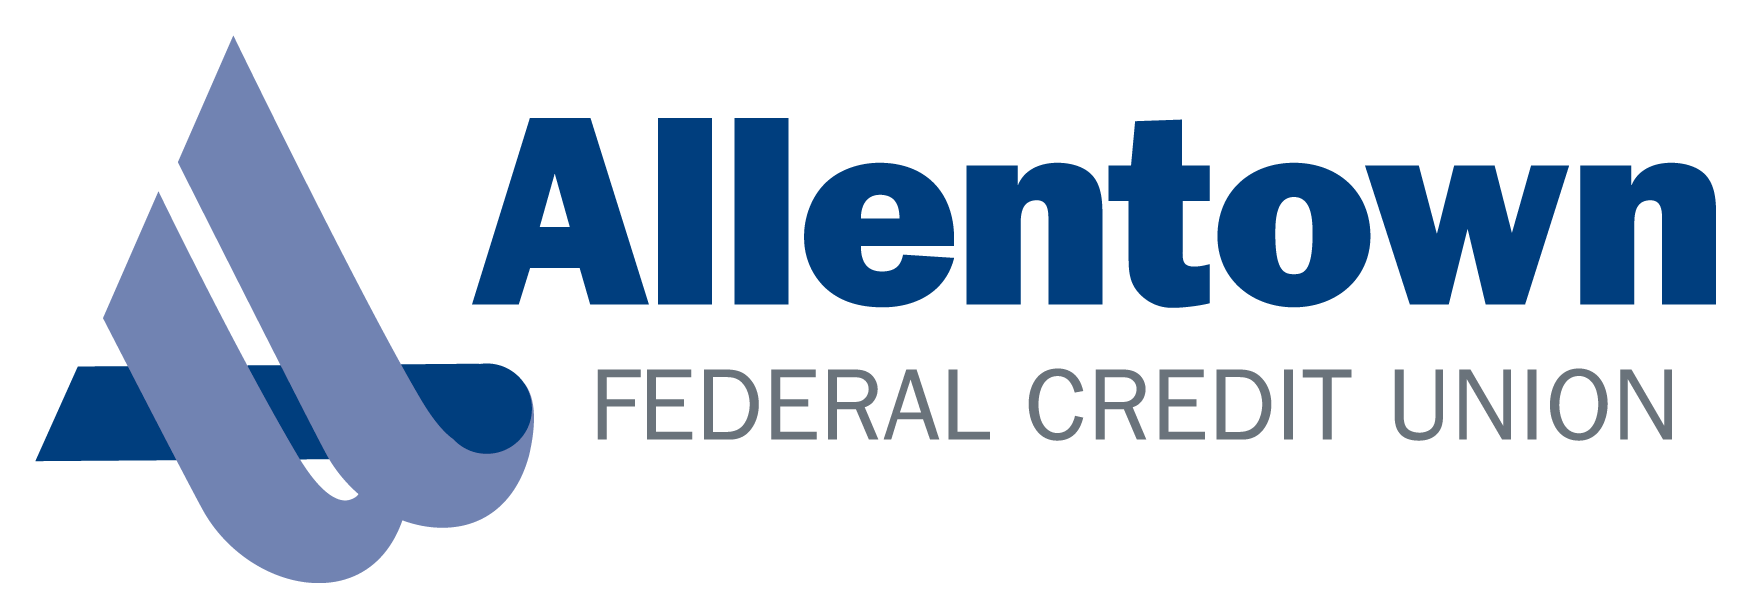 Allentown Federal Credit Union